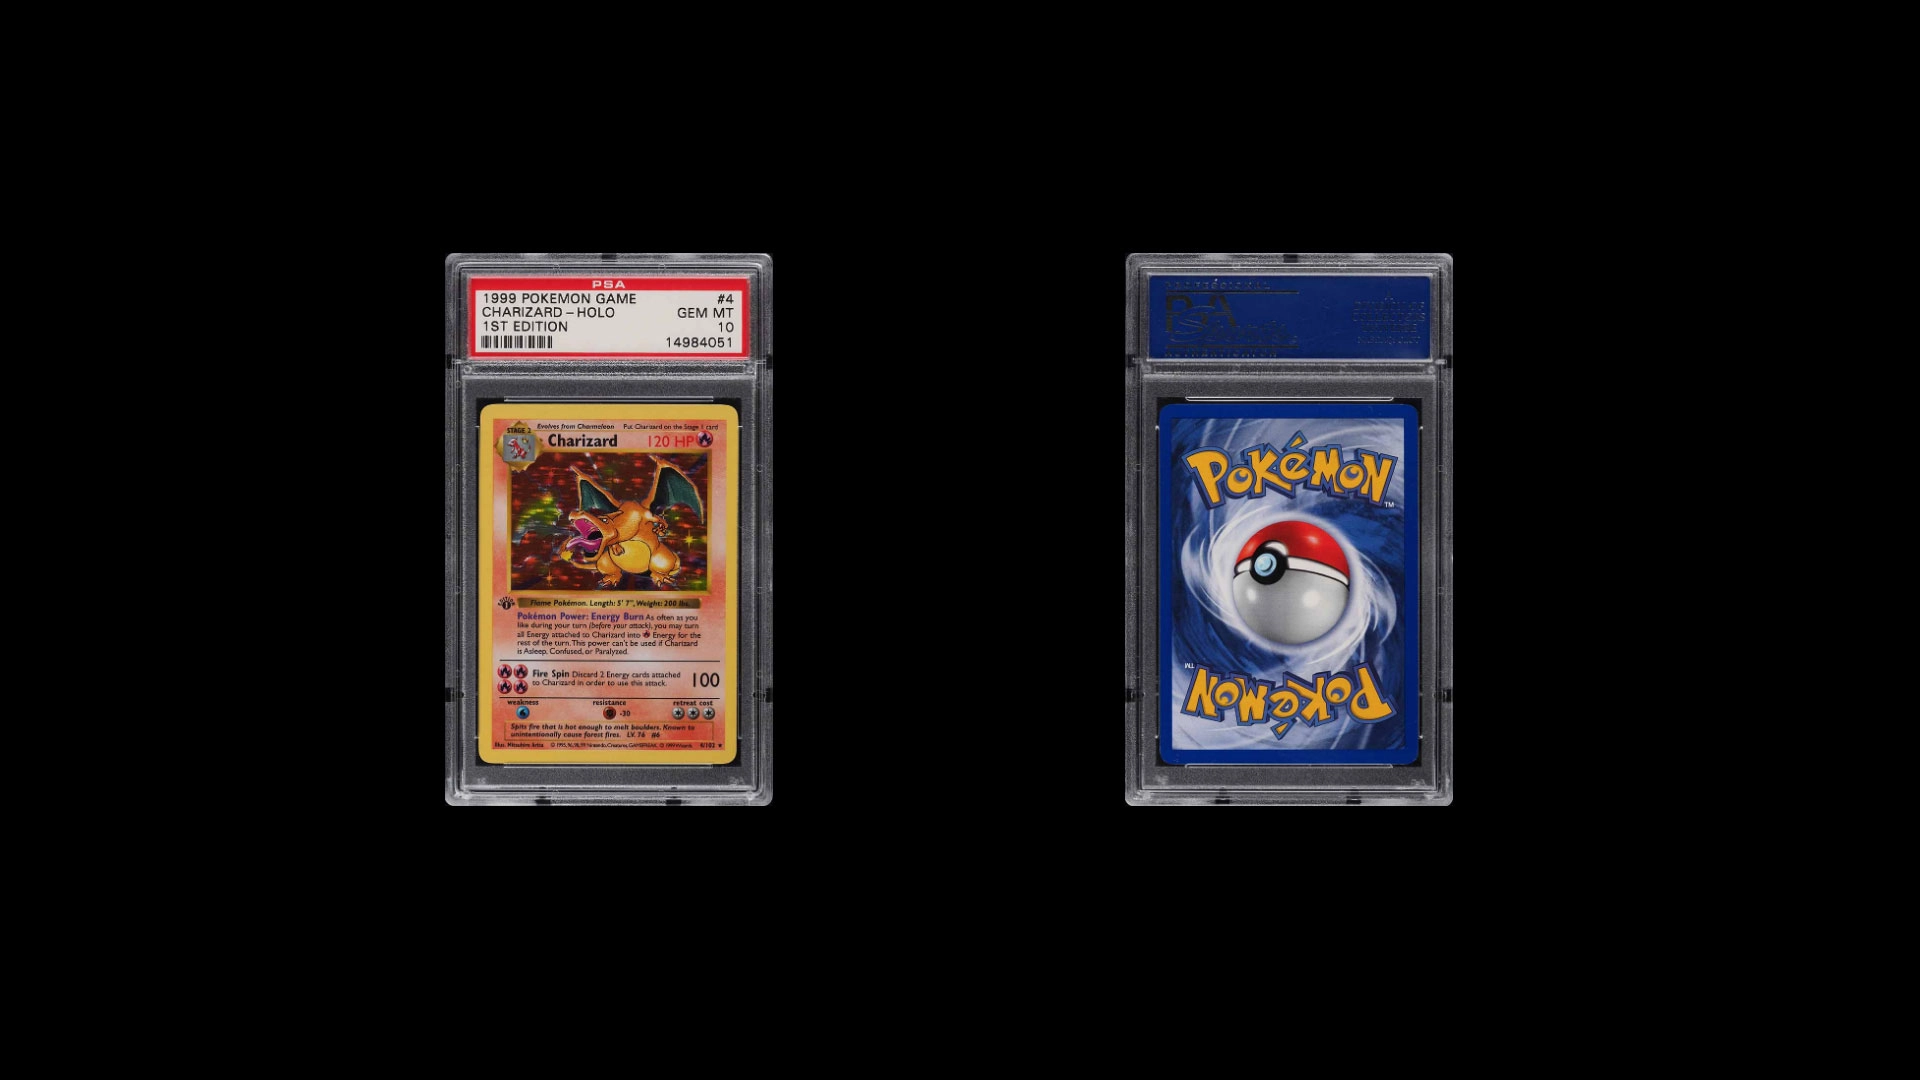 Charizard Gen 1 Pokémon Trading Card Game card